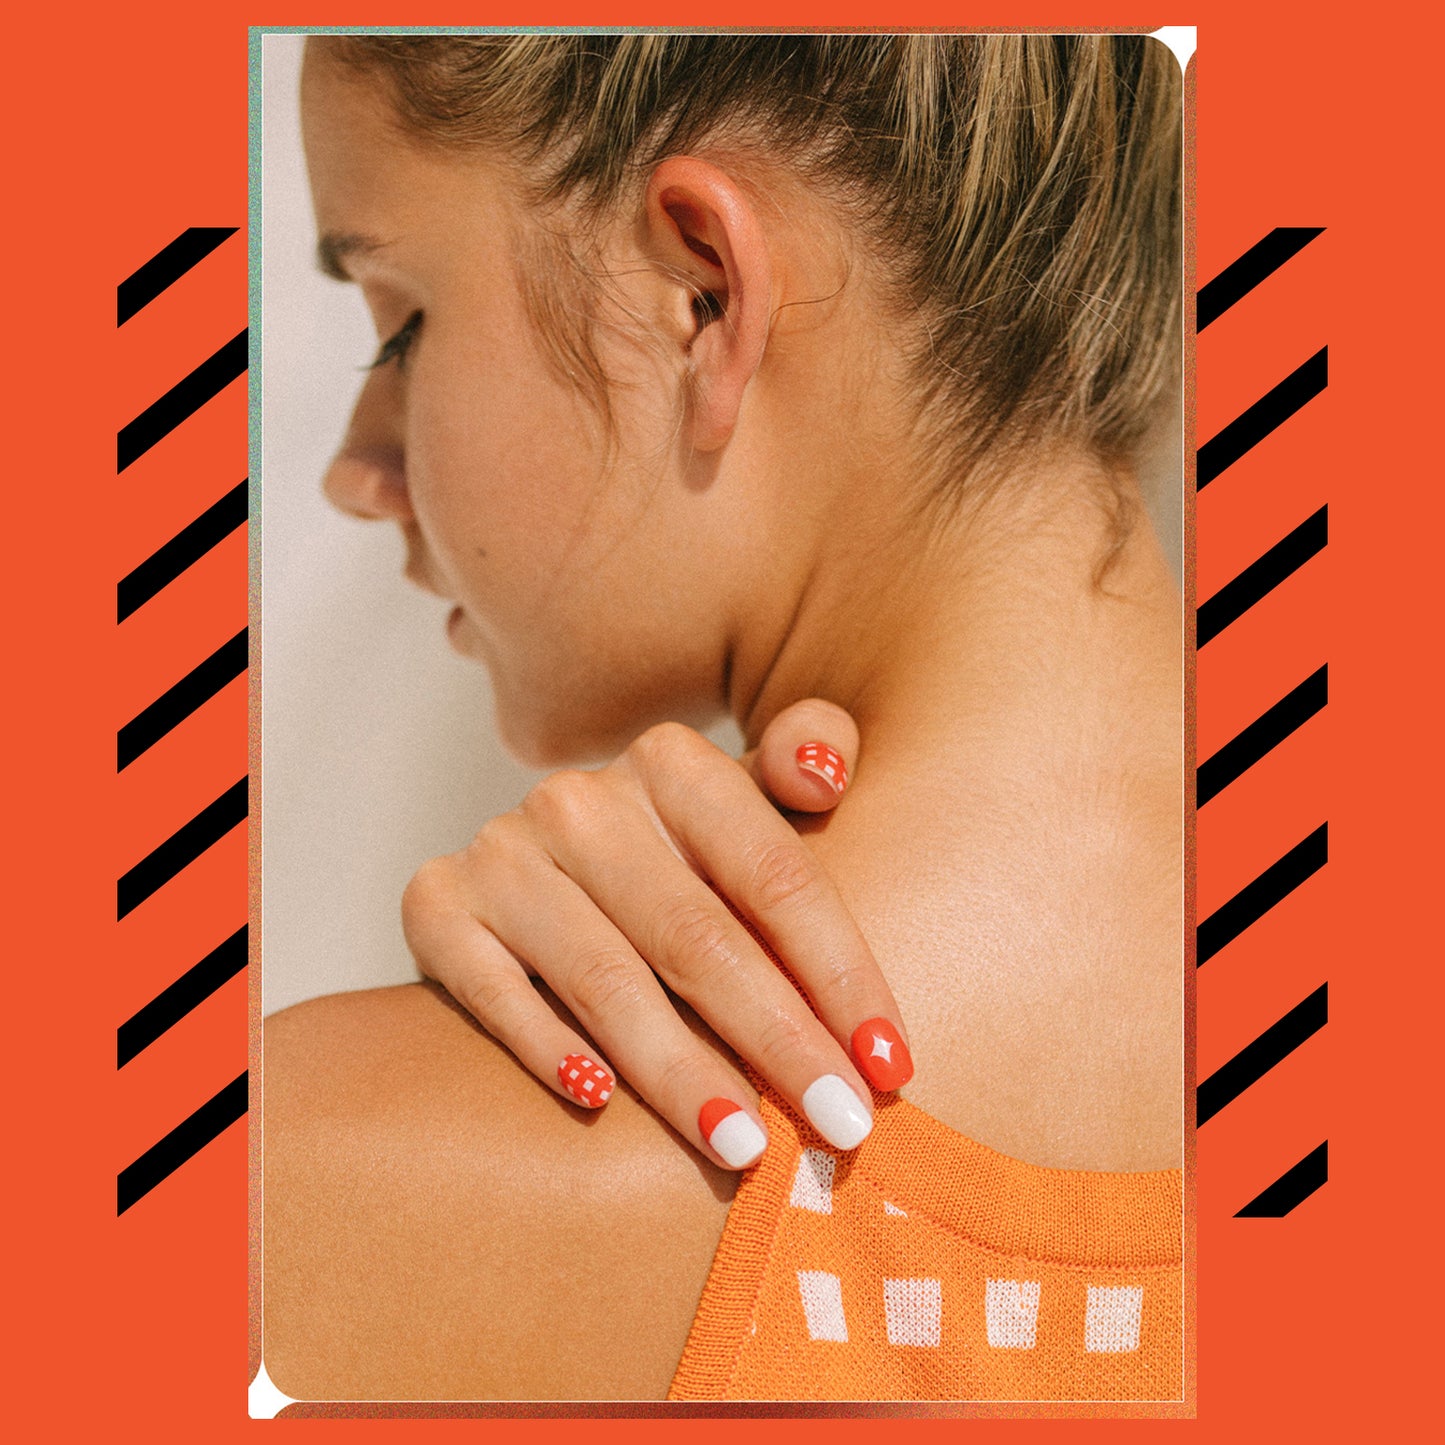 Ohora (N Tangerine  Nail) 30pcs 16 Basic 14 Point Nail Art Pattern Sticker Set Semicure Nail